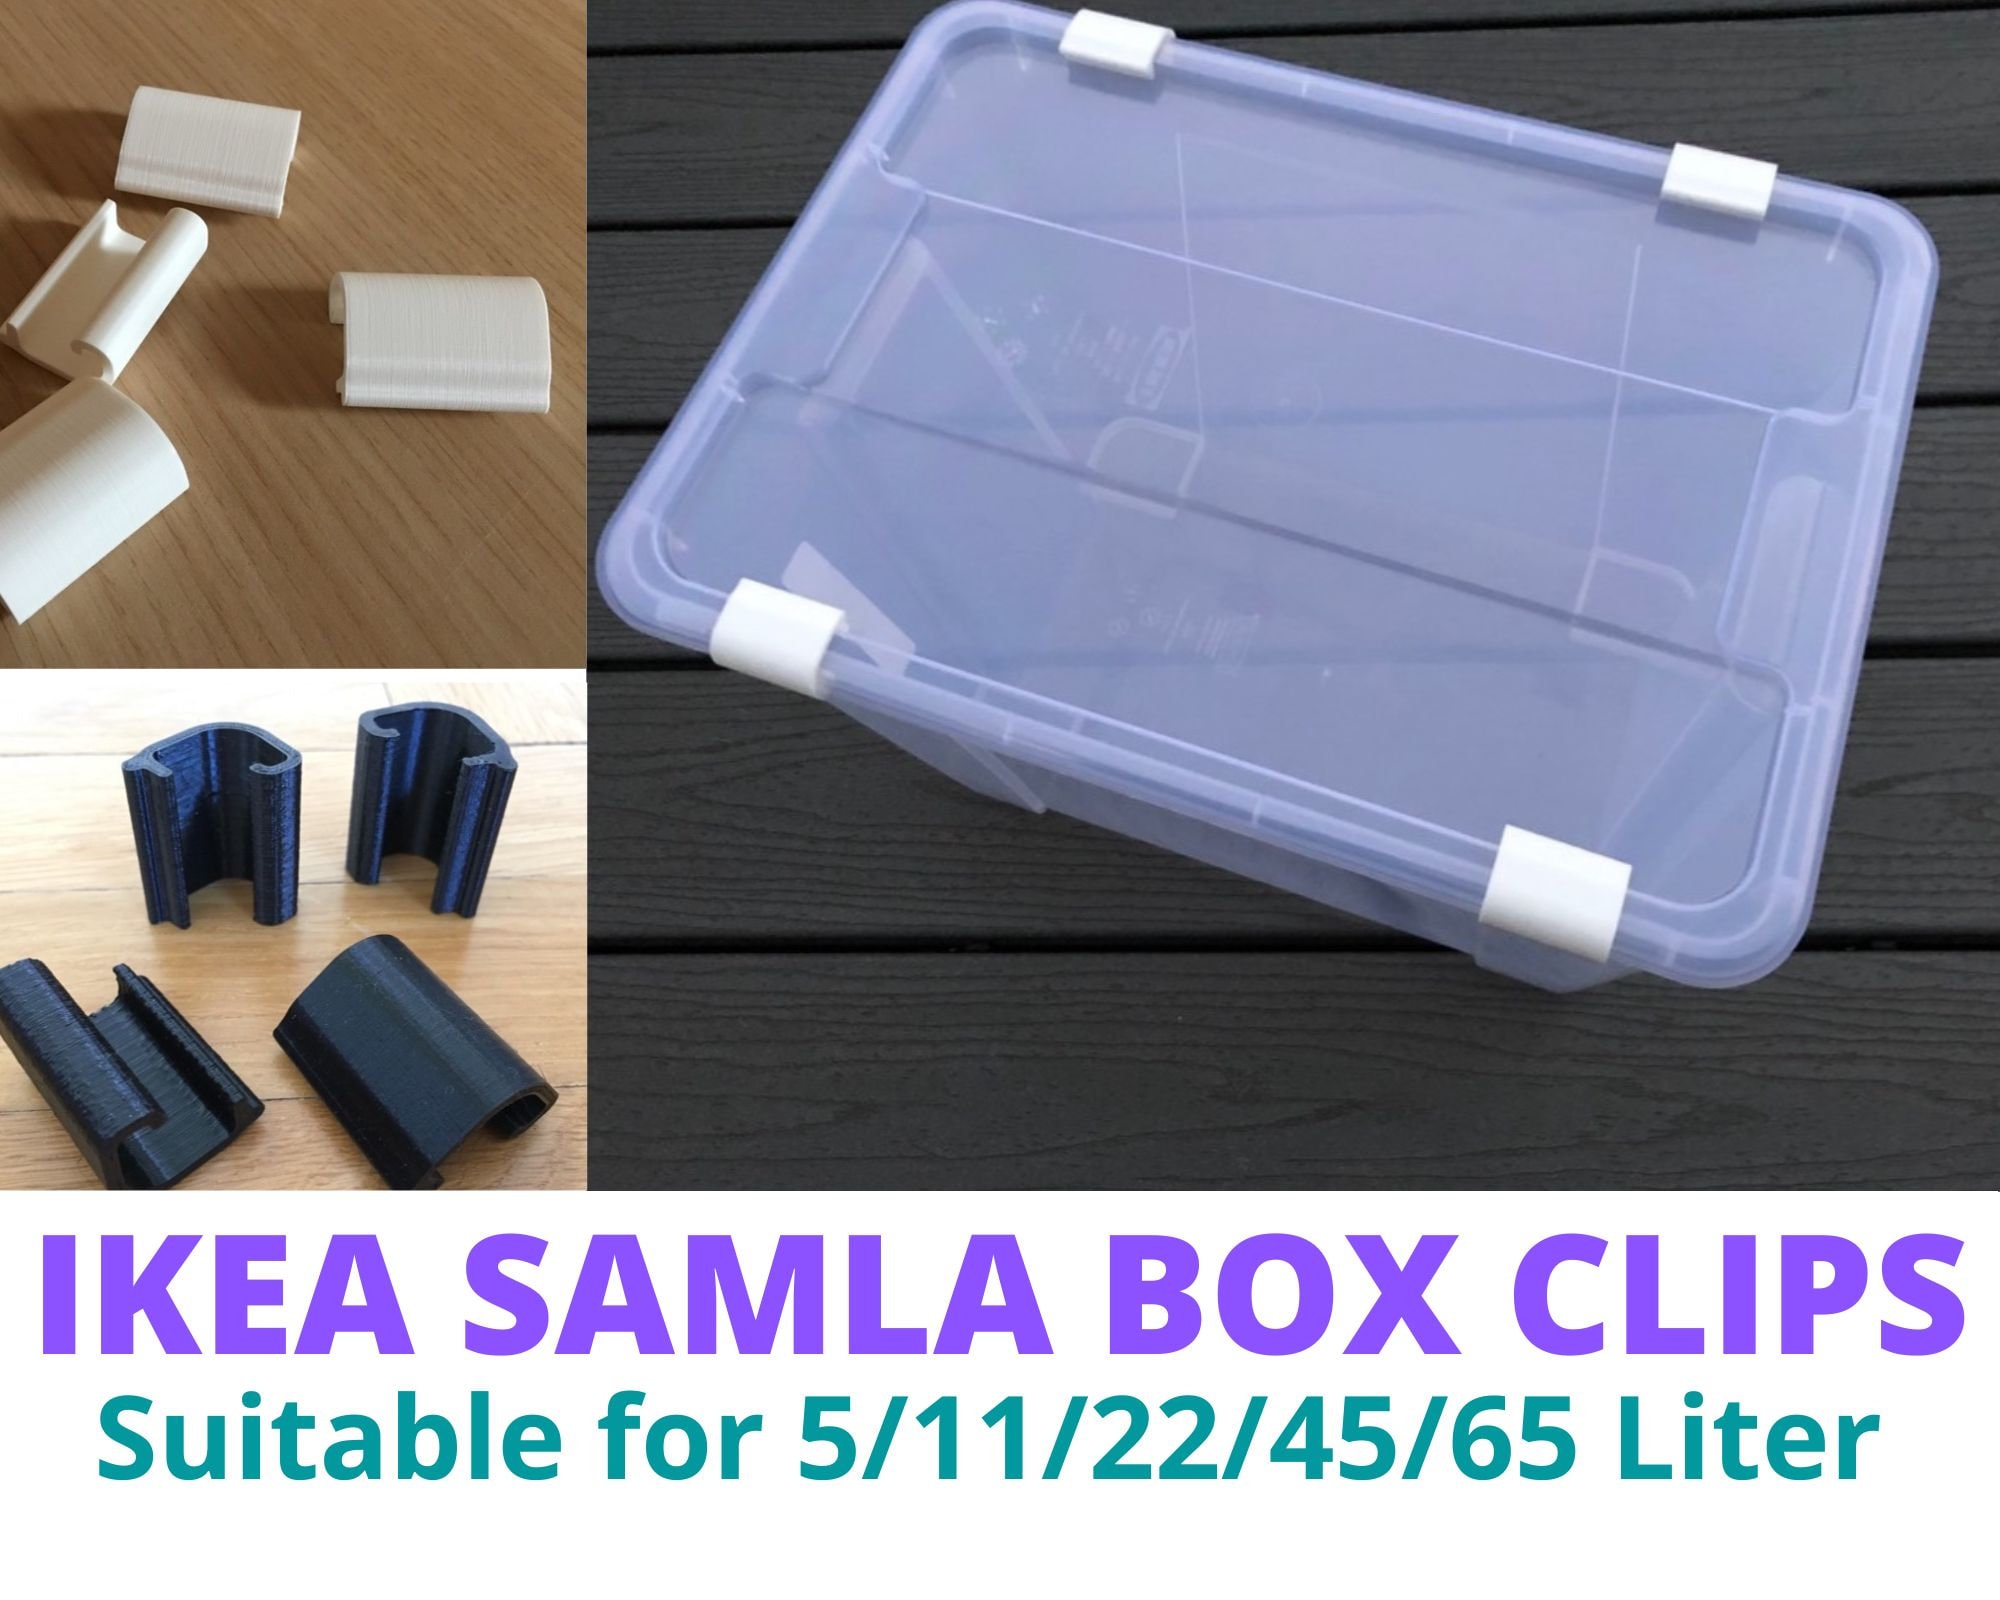 Plastic Pantry Box Transparent Storage Box Container Clip Handle Food Grade  BPA Free Kitchen-food-flour-storage-container-tub-box-biscuits 